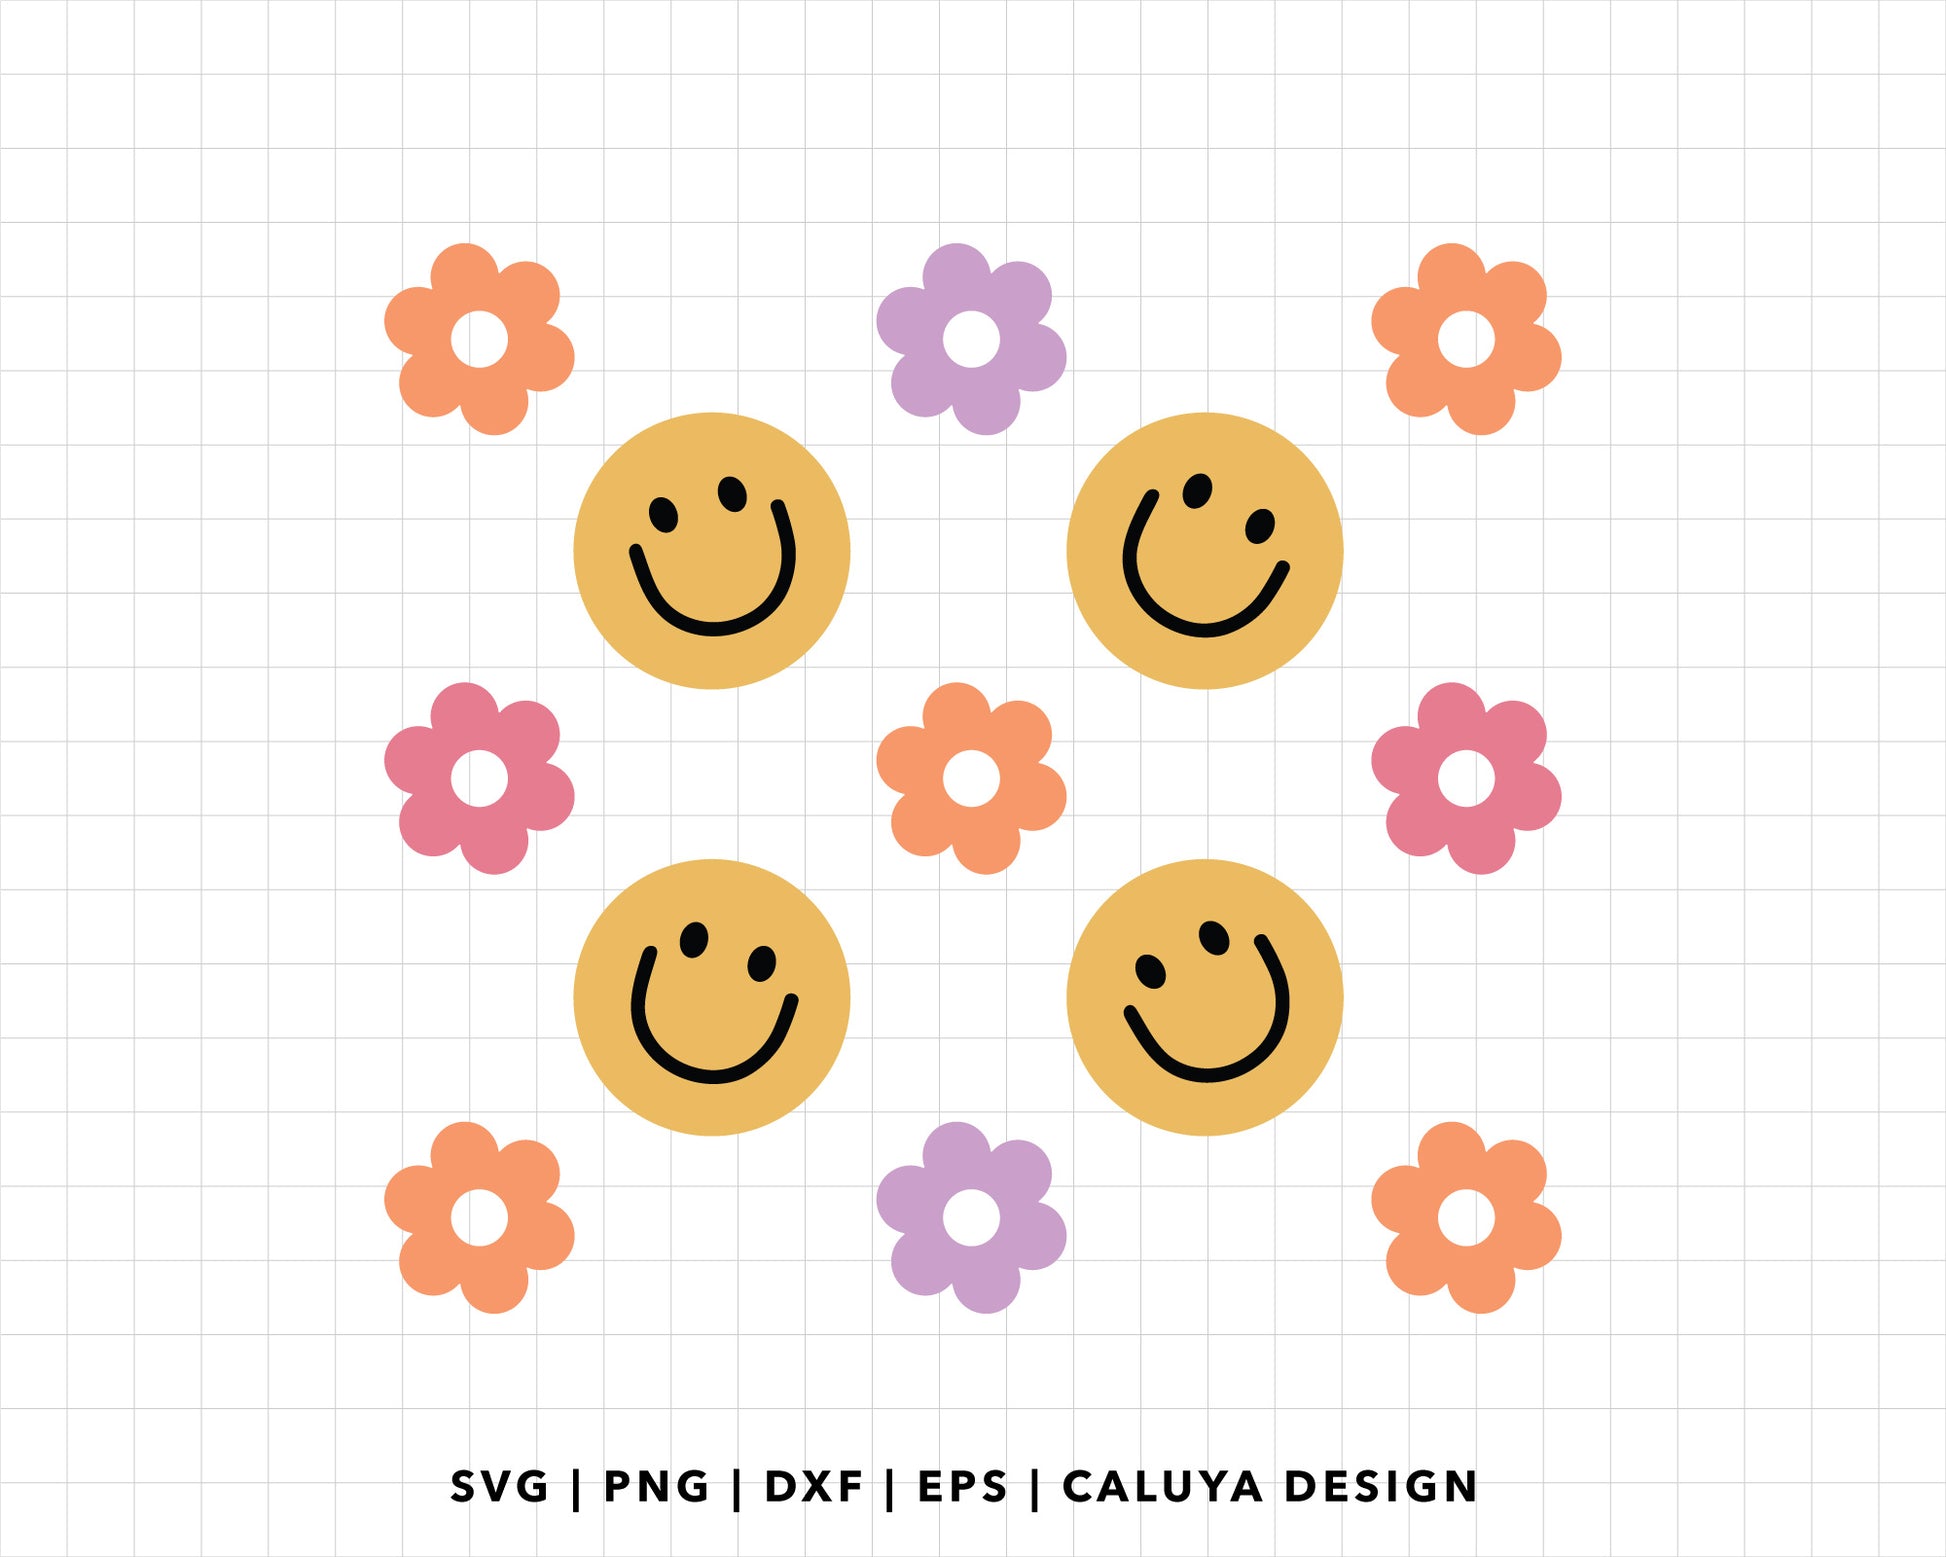 Free Flower Smiley clipart - Download in Illustrator, EPS, SVG, JPG, PNG